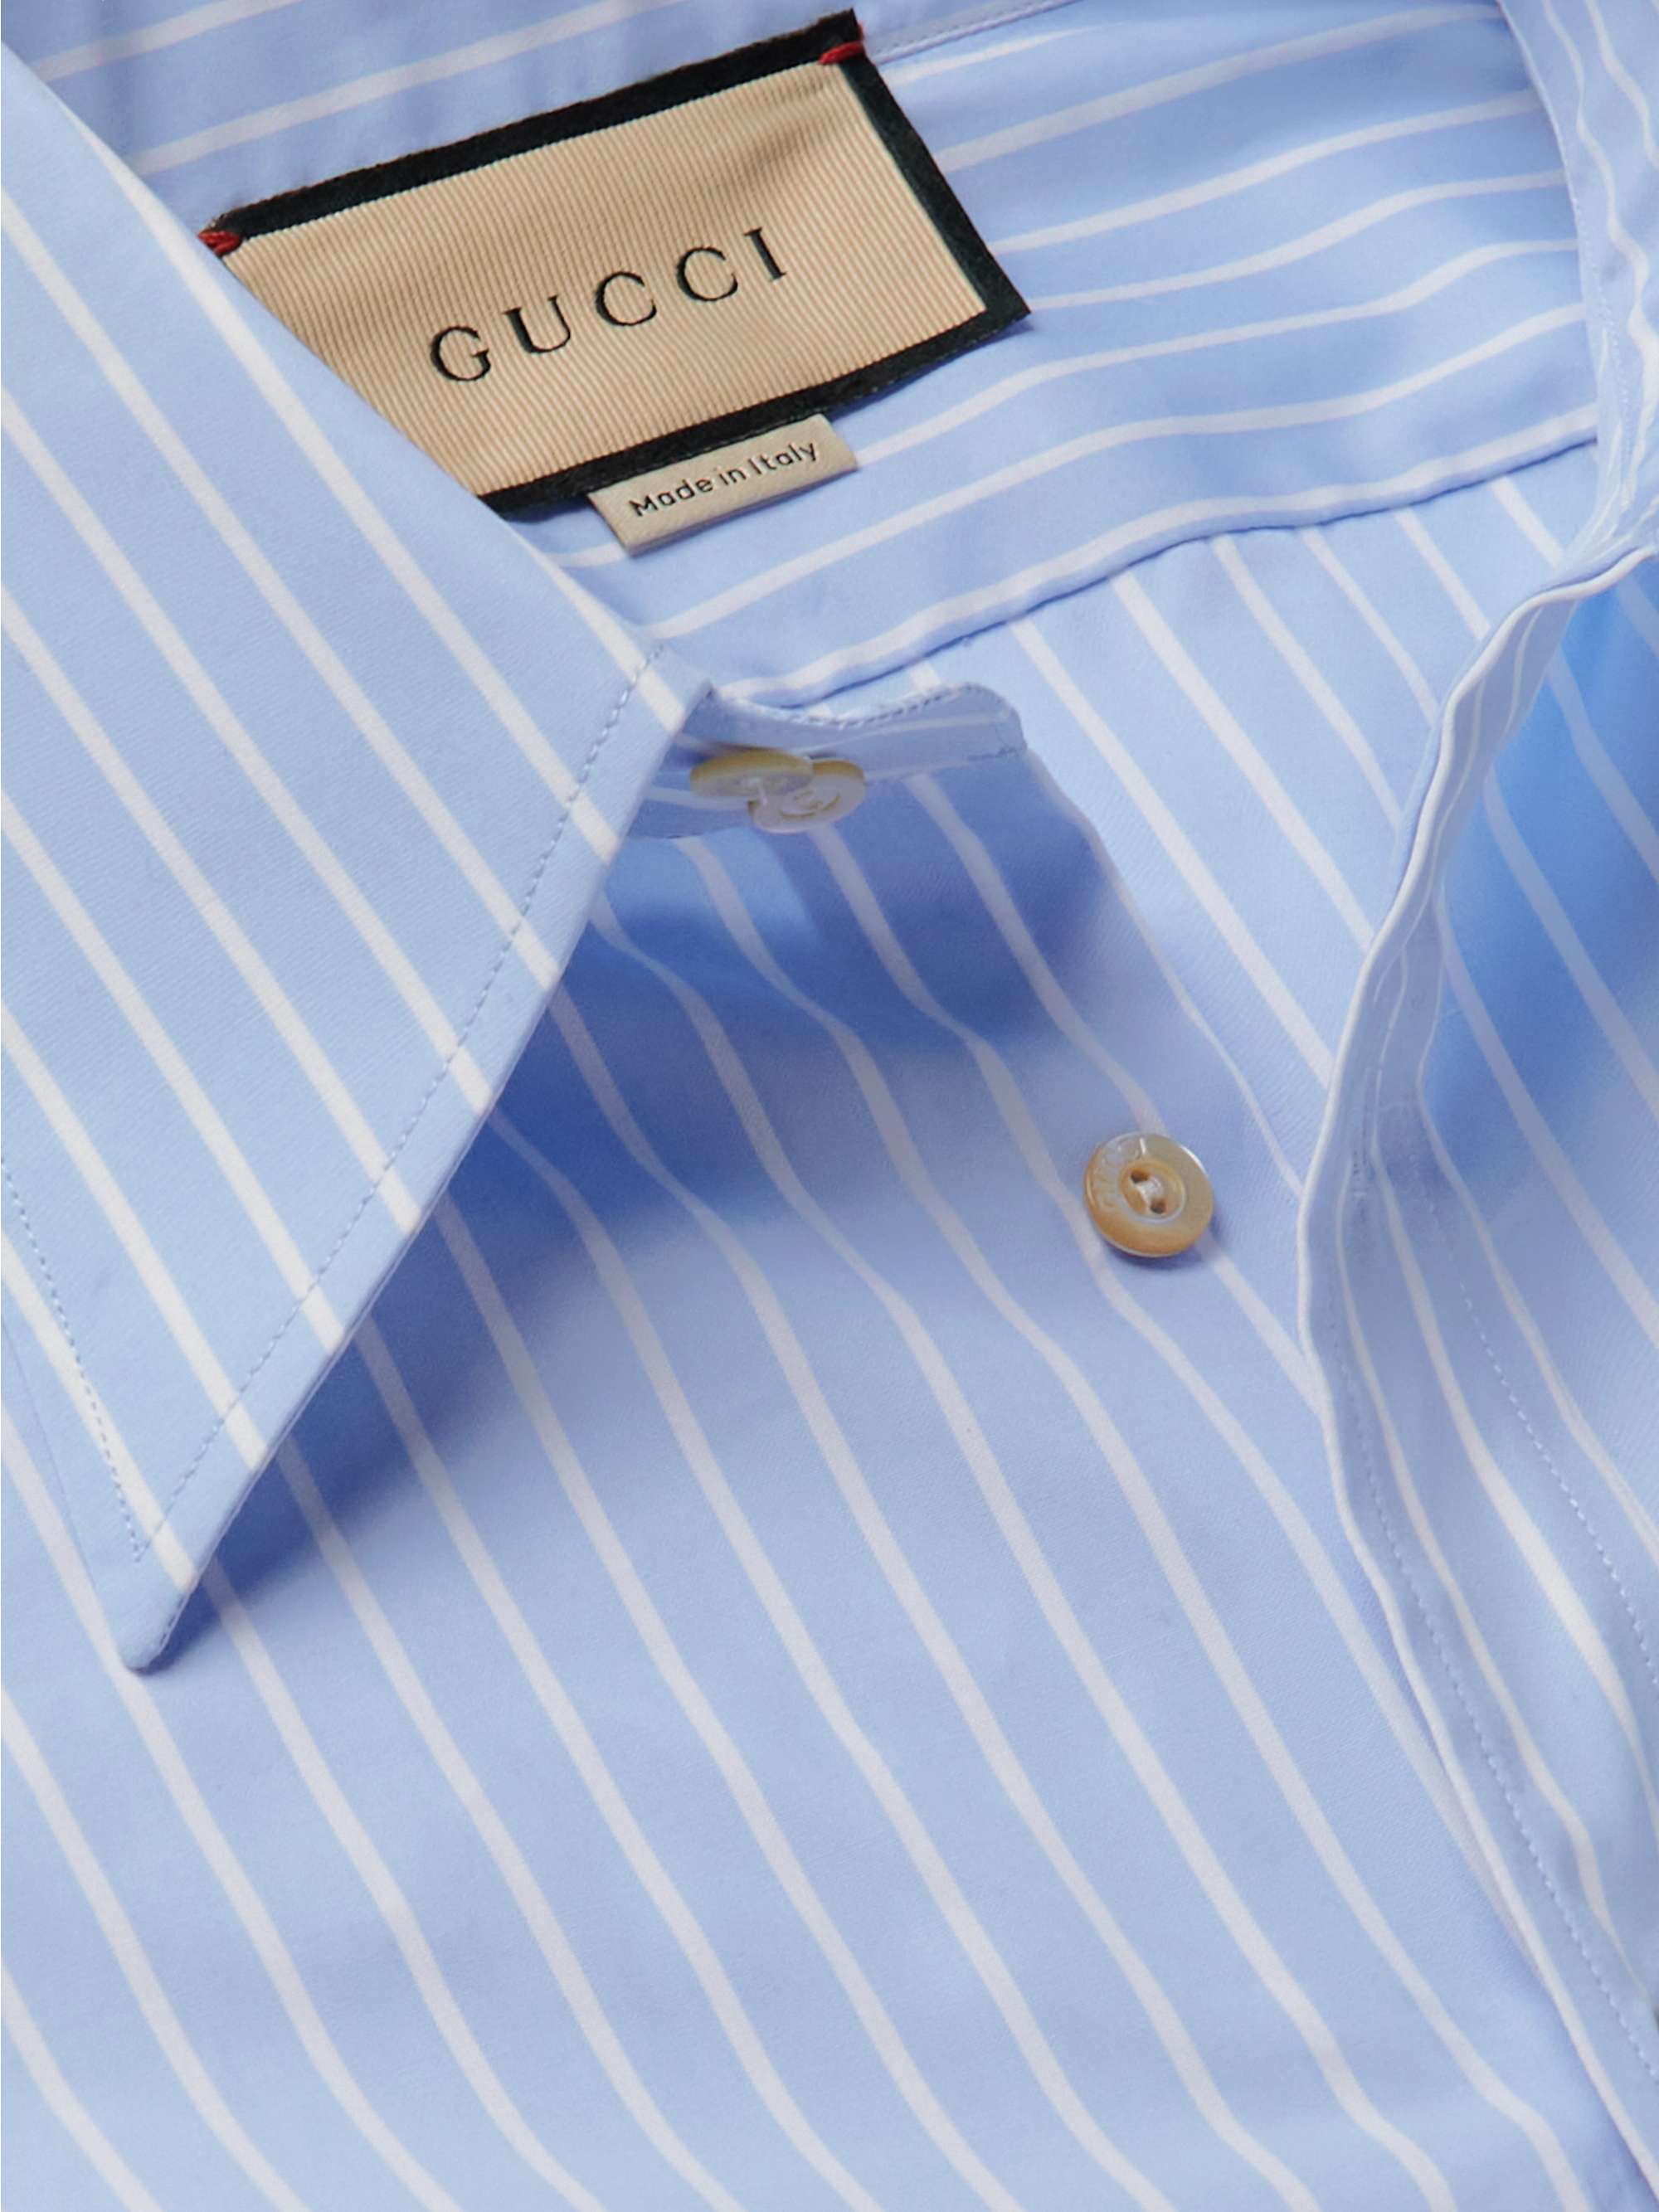 GUCCI Striped Cotton-Poplin Shirt